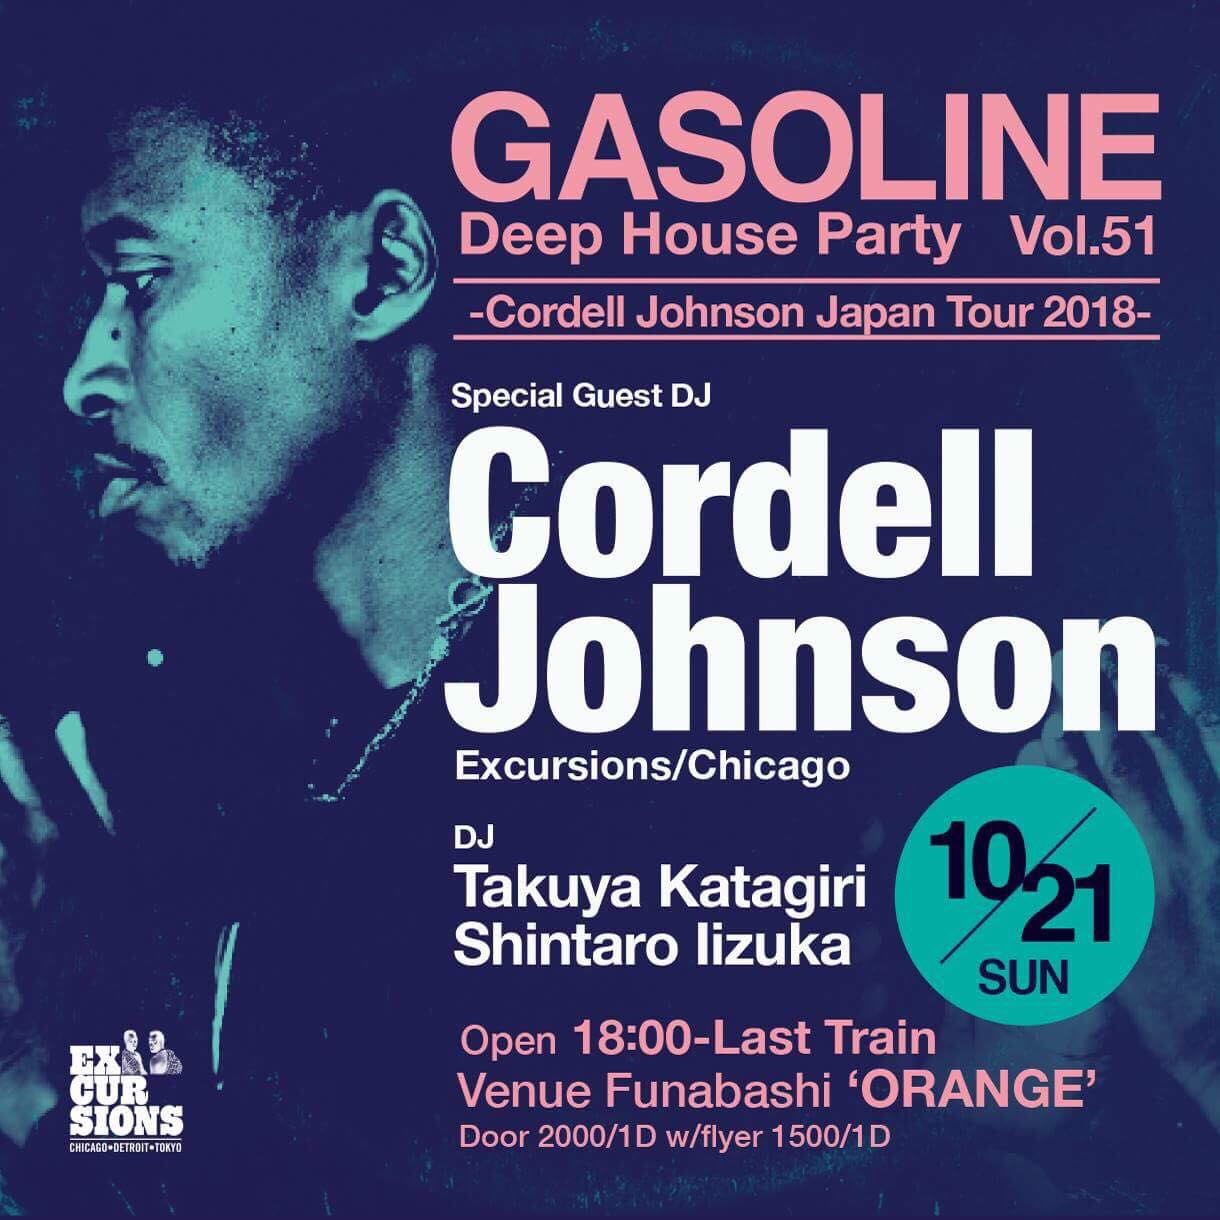 GASOLINE
-Cordell Johnson Japan Tour 2018-